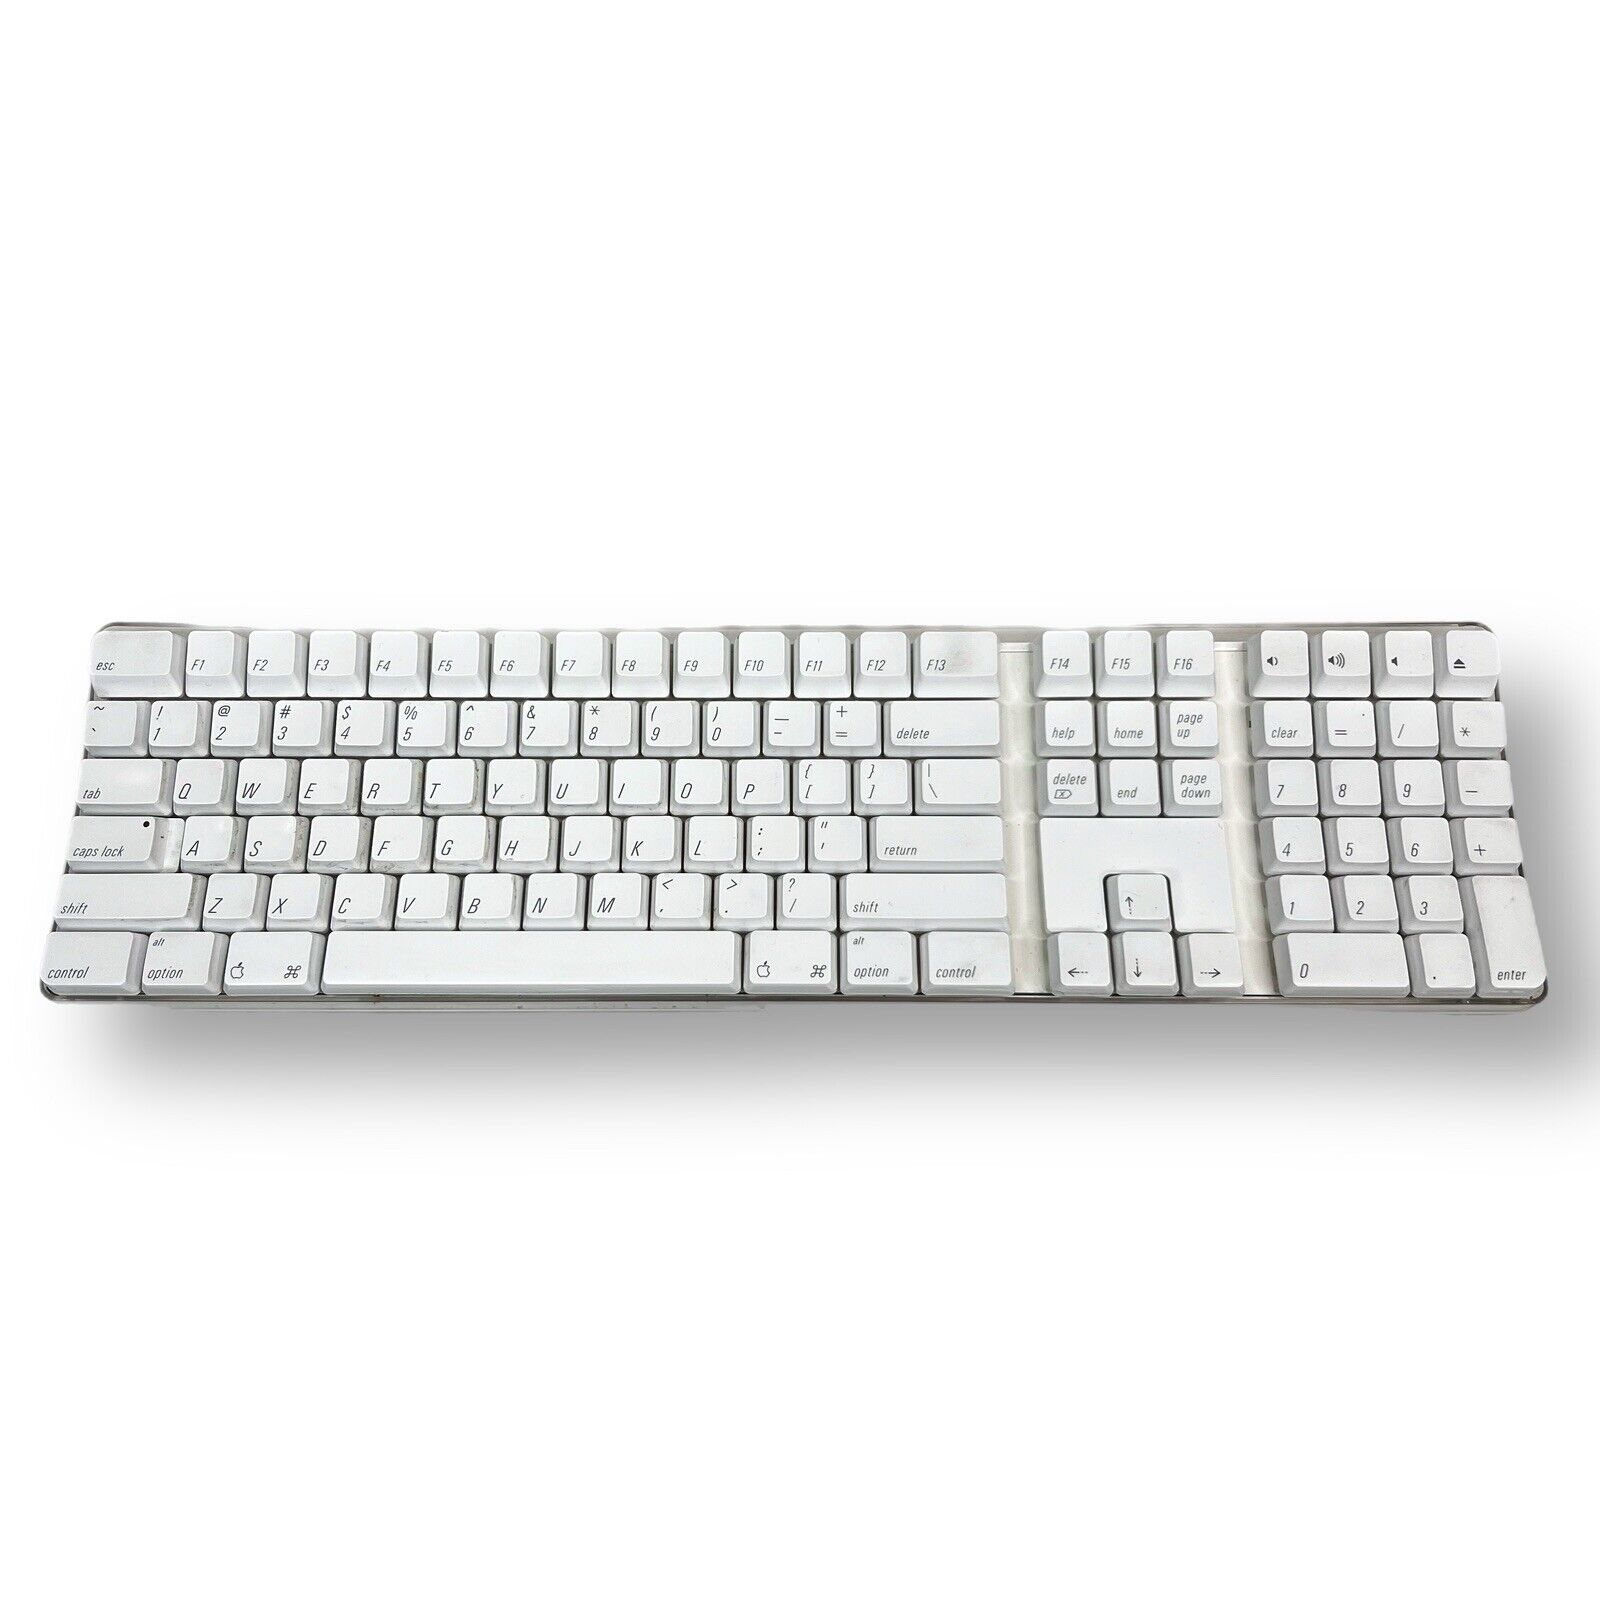 Apple Mac A1016 Wireless Keyboard Clicky White Works